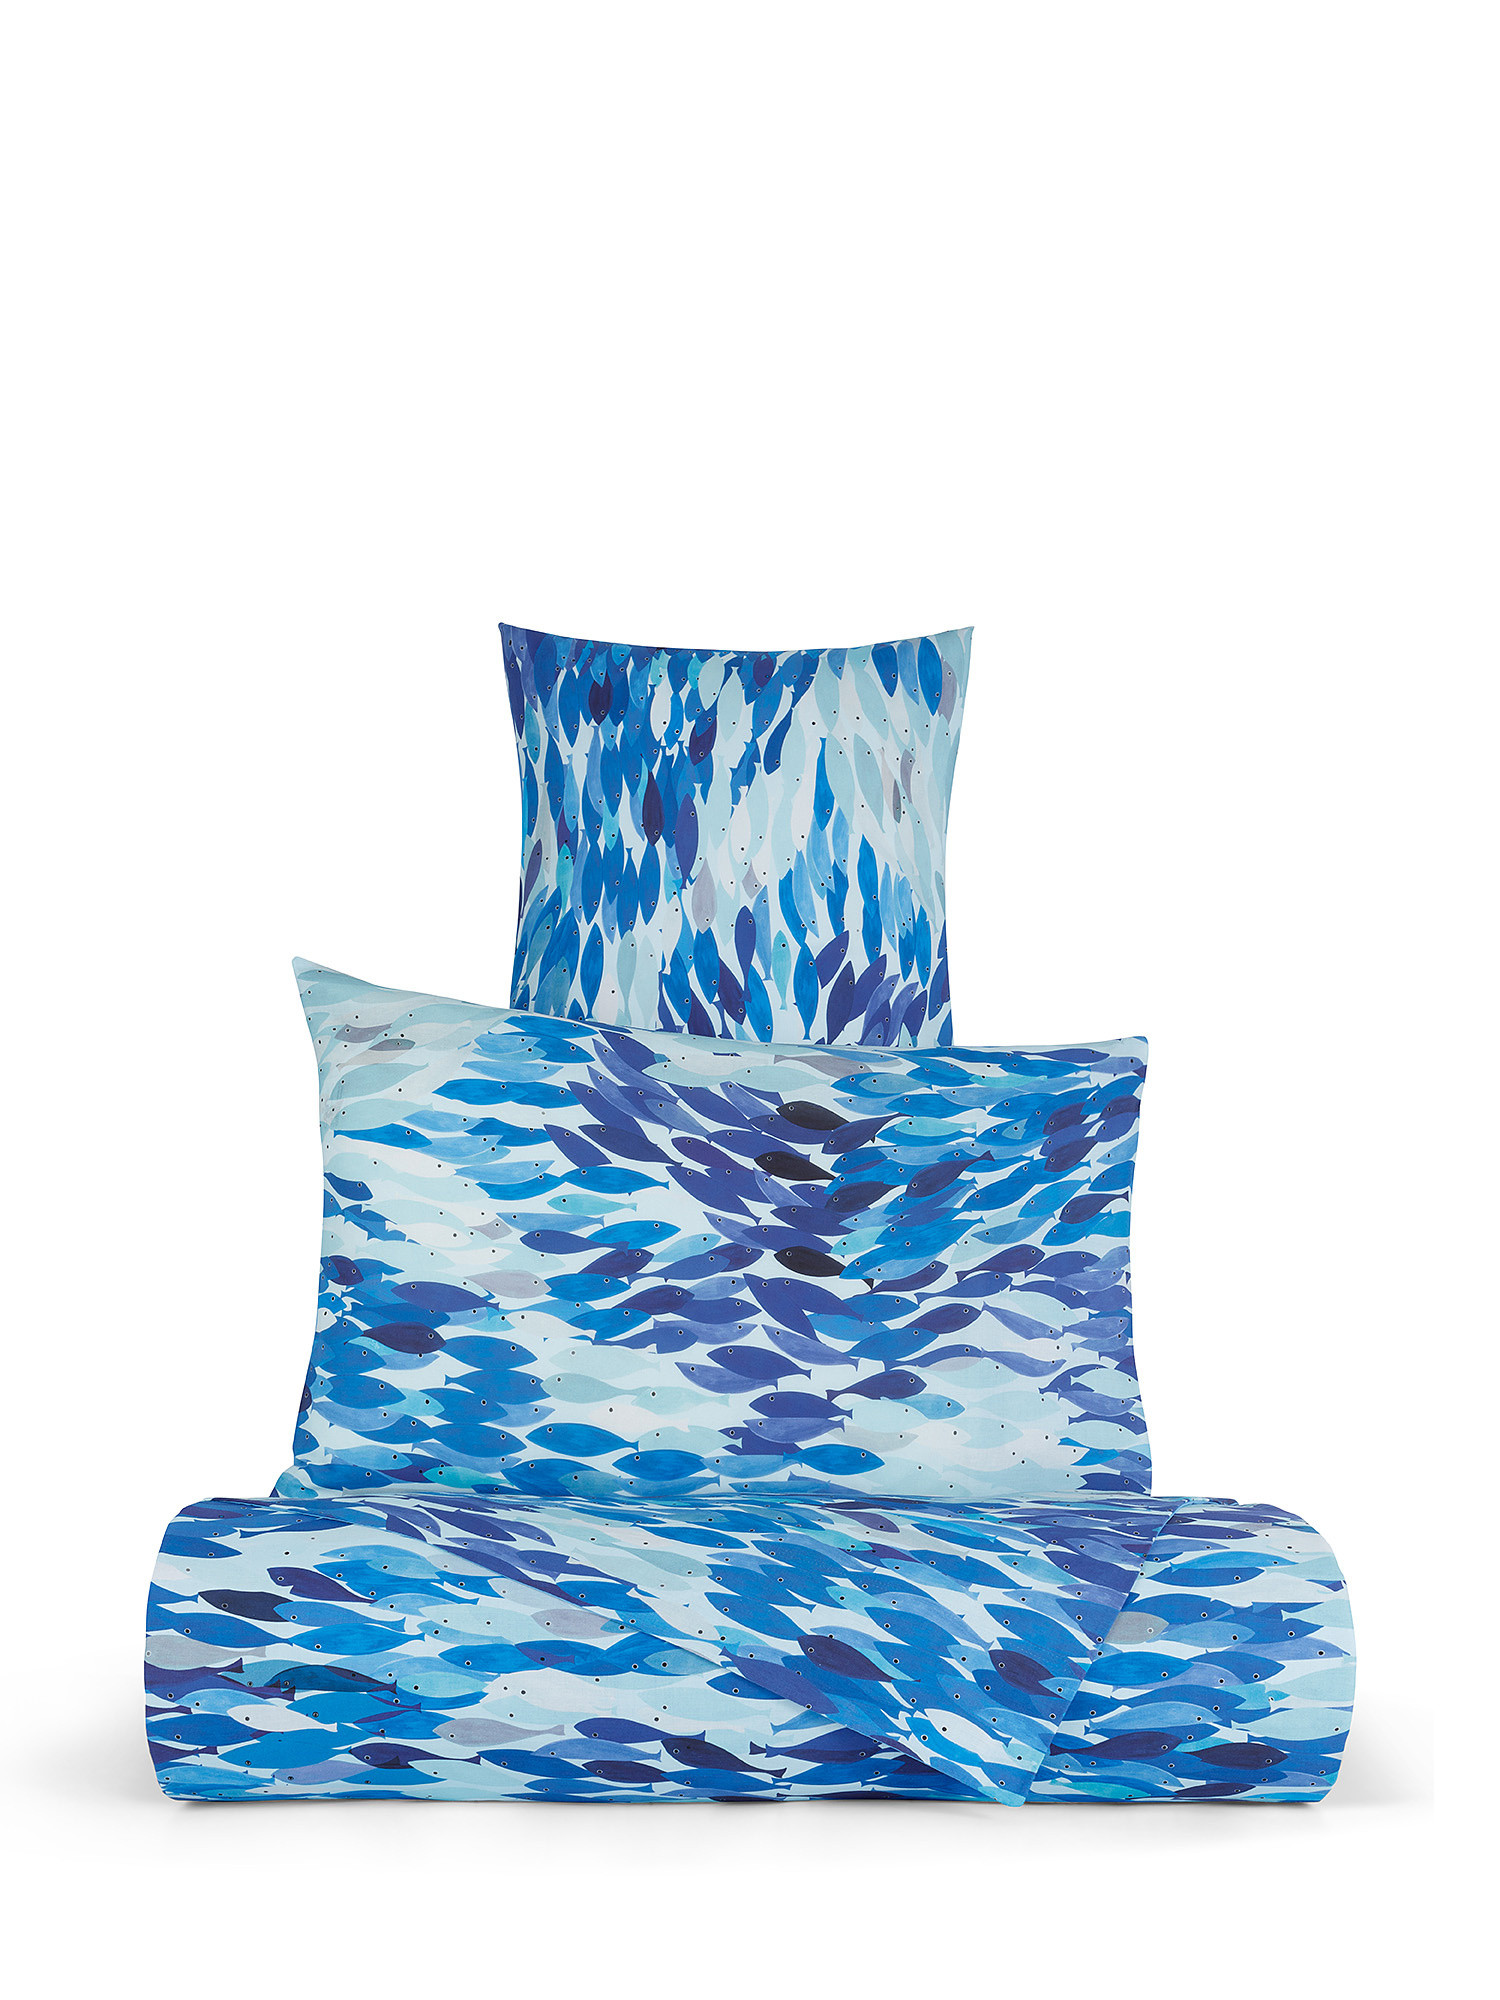 Fish pattern cotton muslin pillowcase, Blue, large image number 2